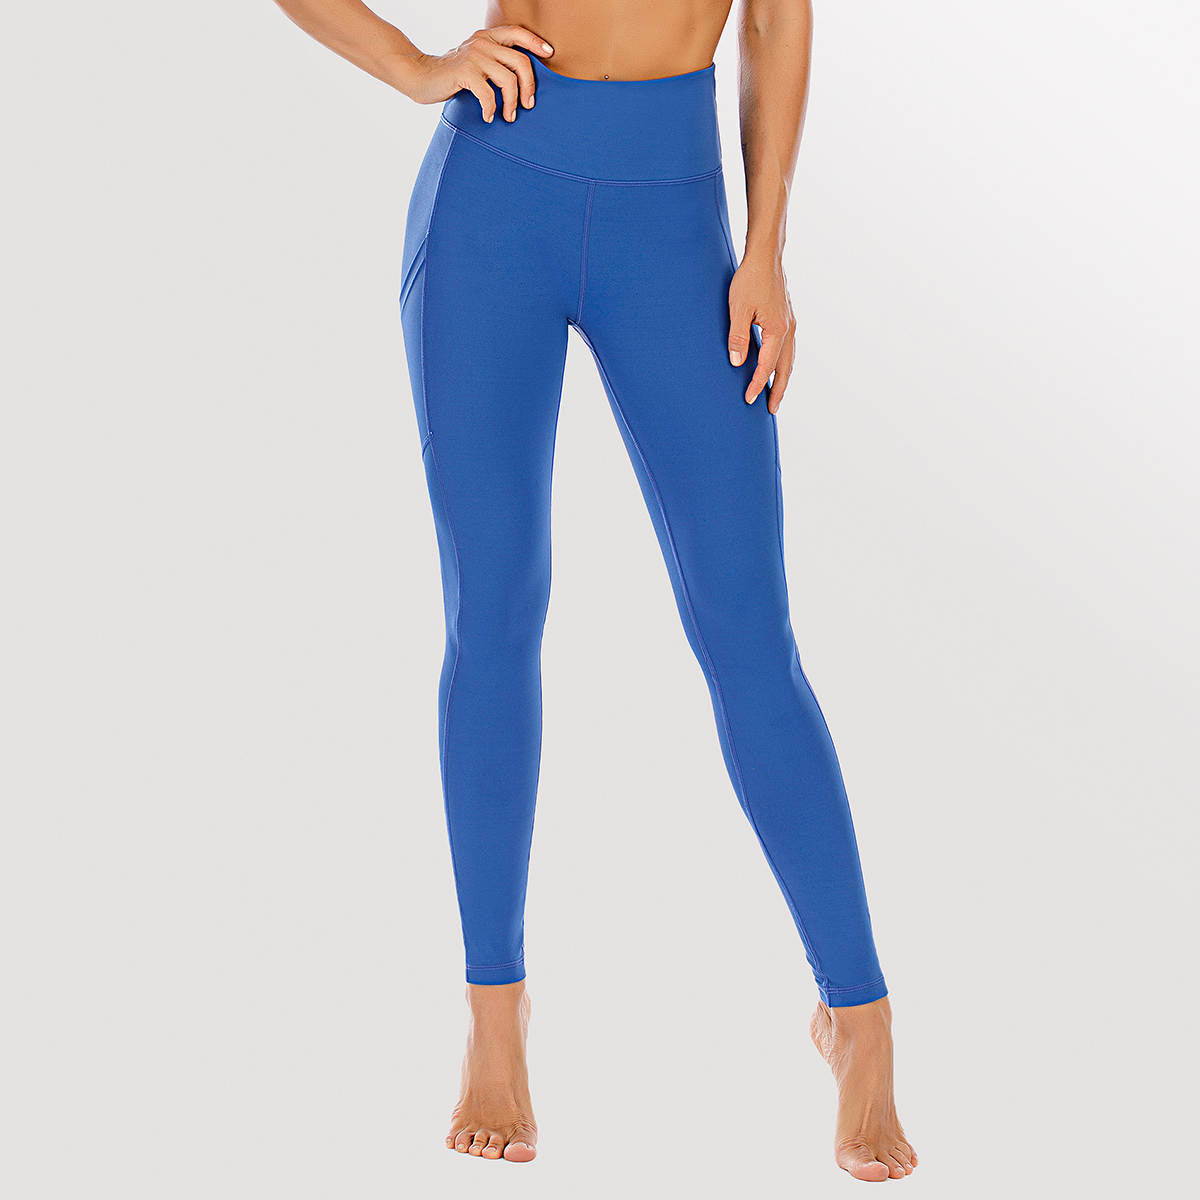 INNERSY High Waisted Leggings for Women Compression Yoga Pants Tummy  Control Workout Leggings (L, Royal Blue) - Walmart.com